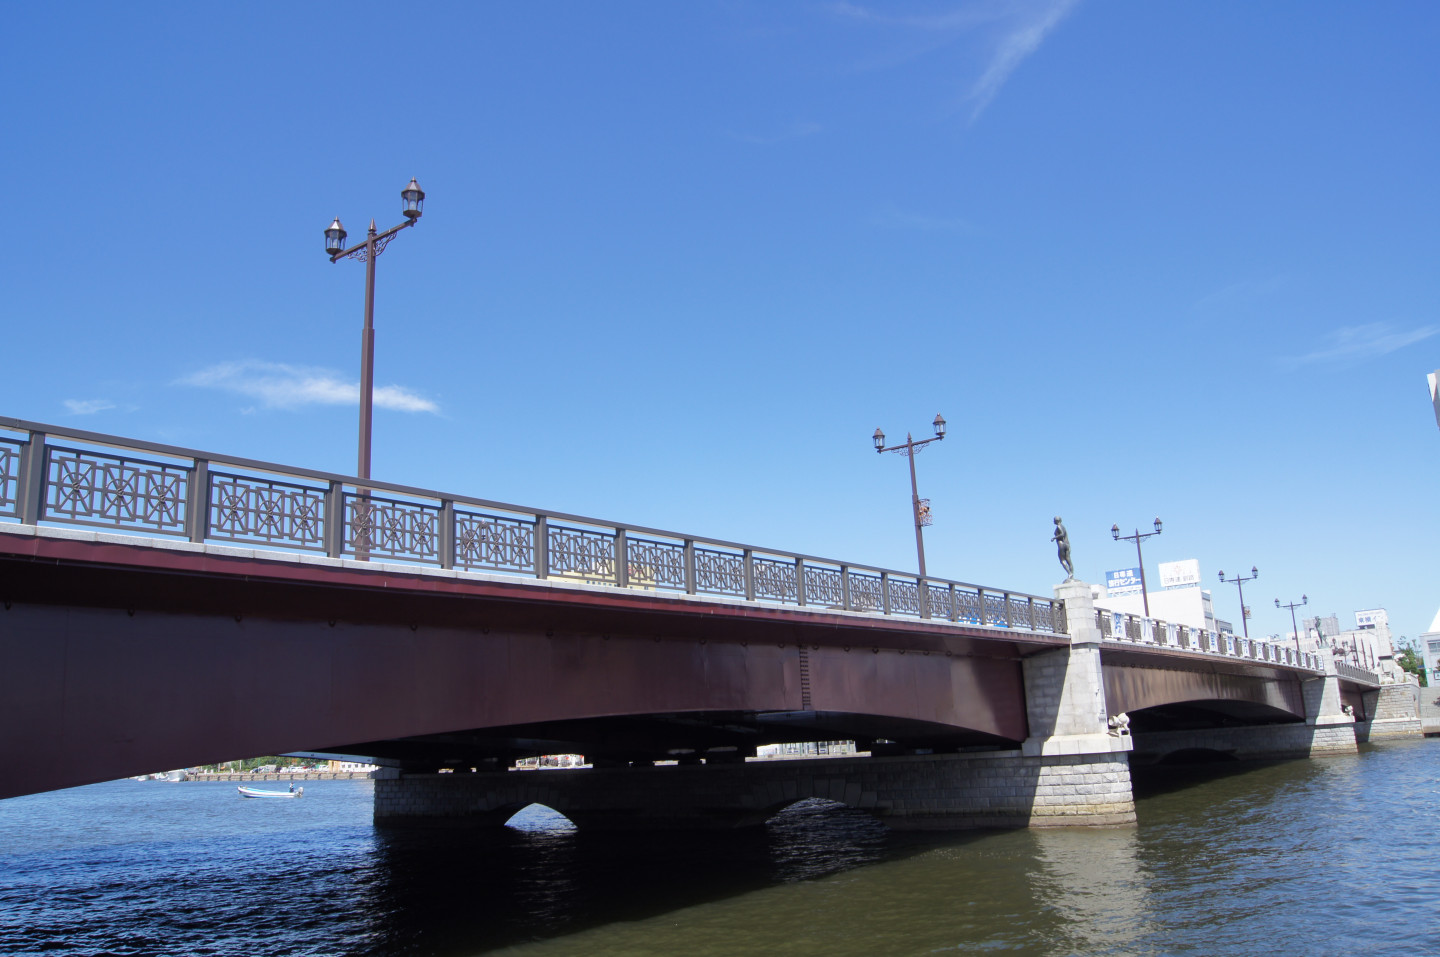 Nusamai Bridge and the Kushiro River banks were the main locations where the movie Banka was filmed